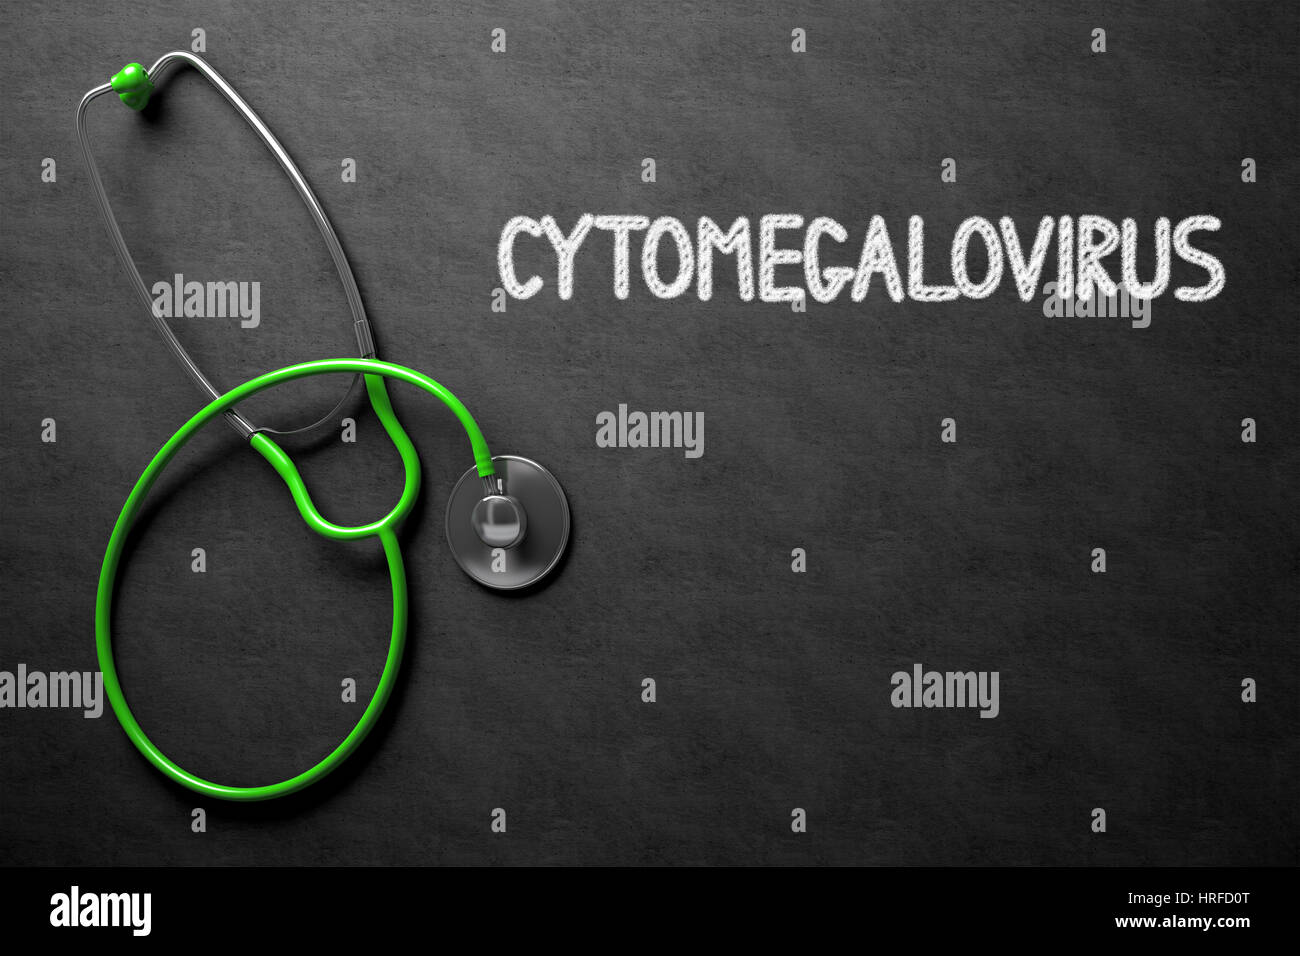 Medical Concept: Cytomegalovirus - Medical Concept on Black Chalkboard. Medical Concept: Cytomegalovirus -  Black Chalkboard with Hand Drawn Text and  Stock Photo